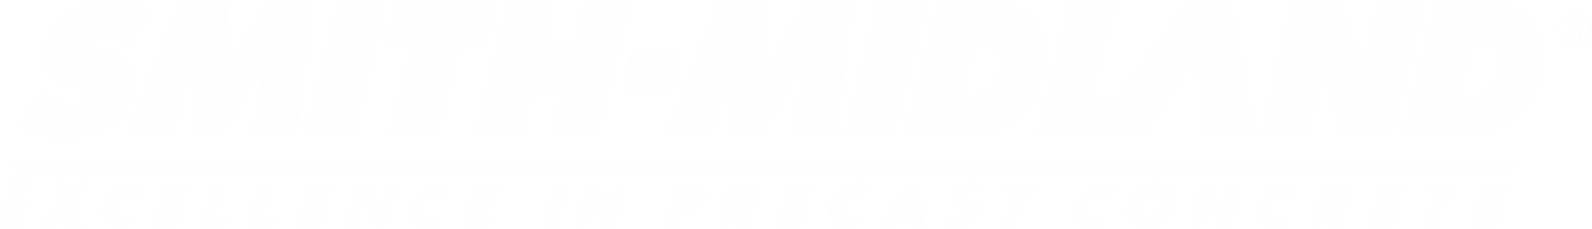 Smith-Midland logo large for dark backgrounds (transparent PNG)